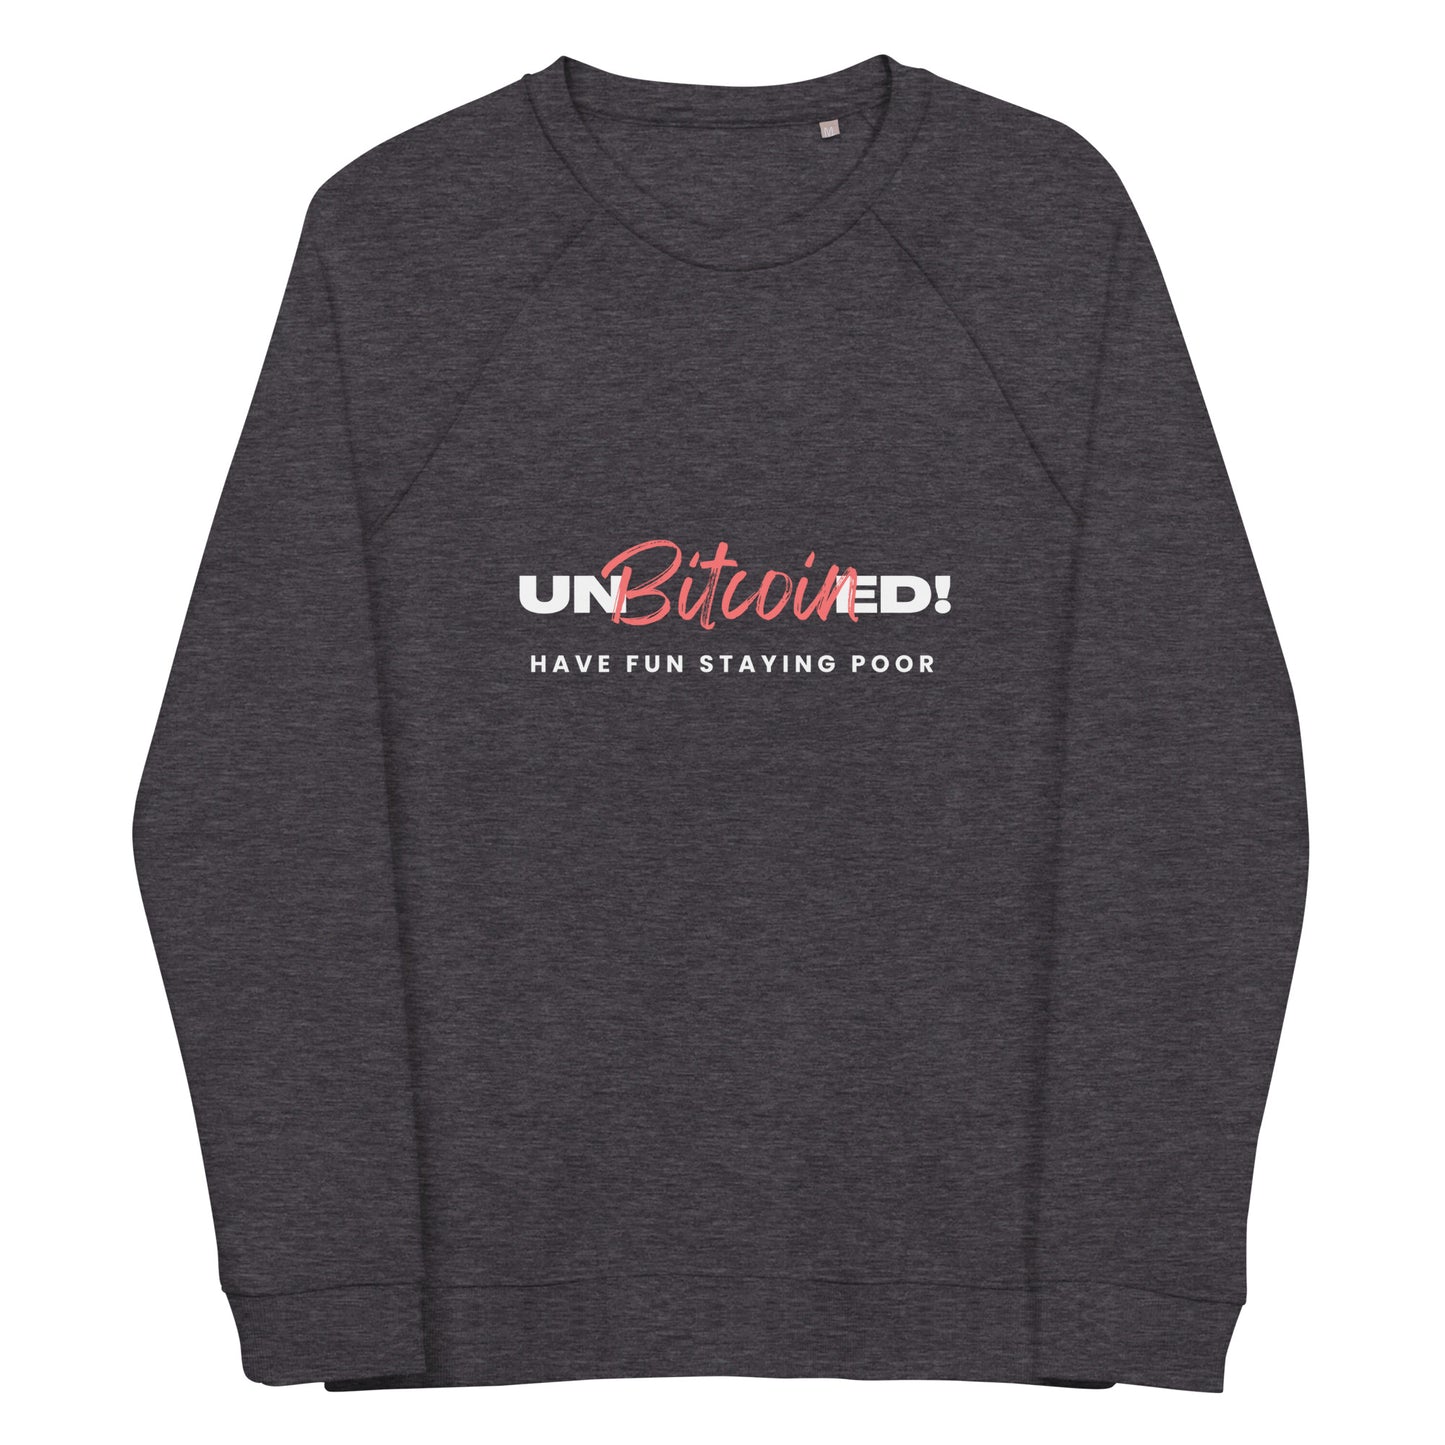 Unbitcoined! Have fun staying poor Unisex organic raglan sweatshirt